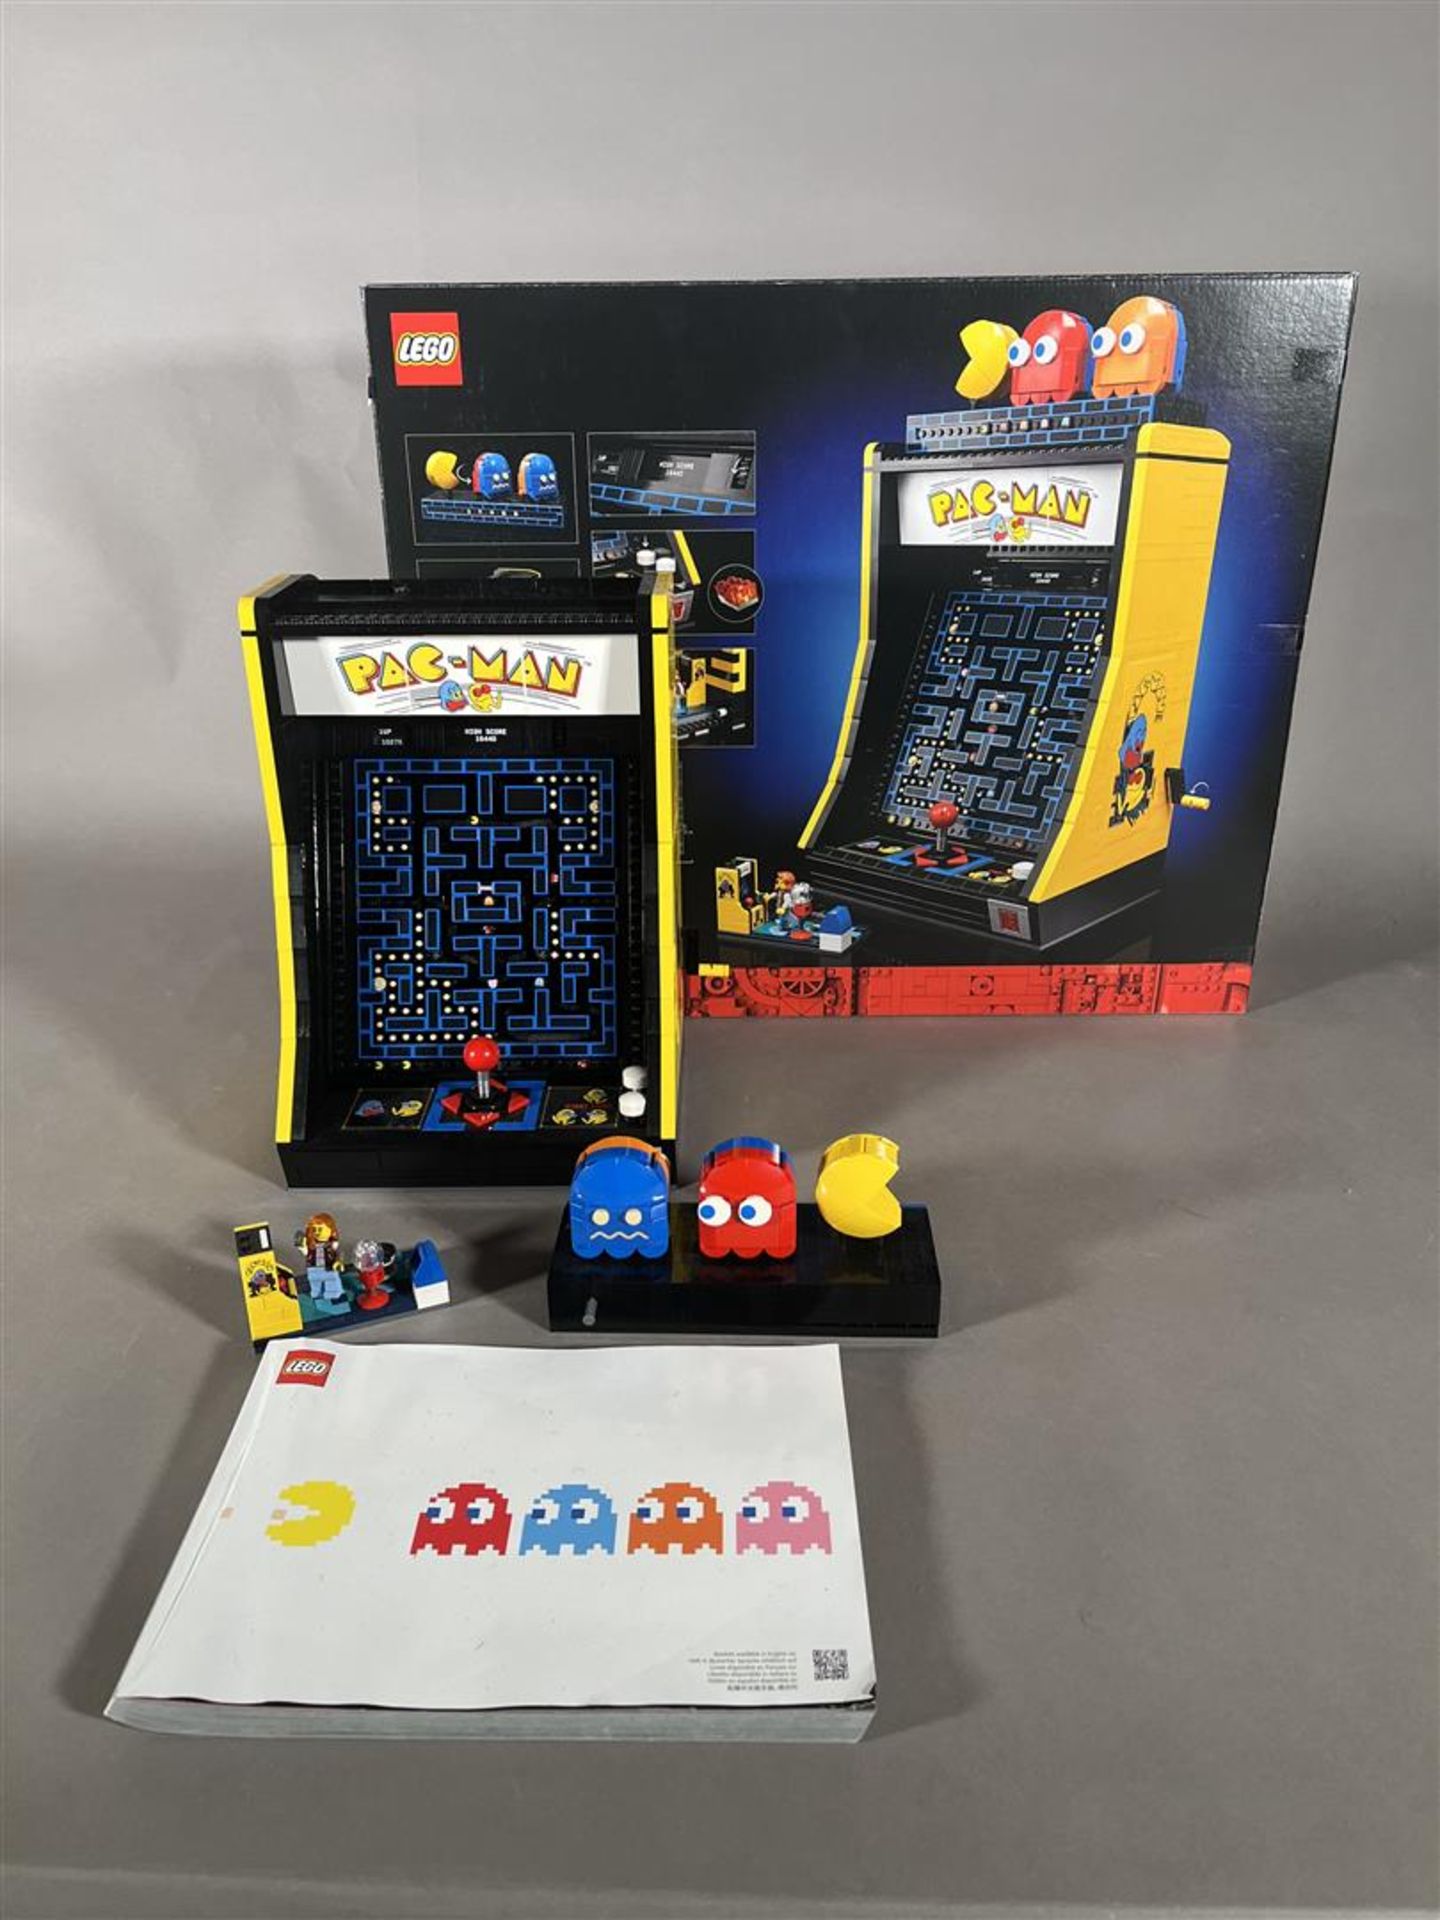 Lego Icons 10323 PAC-MAN